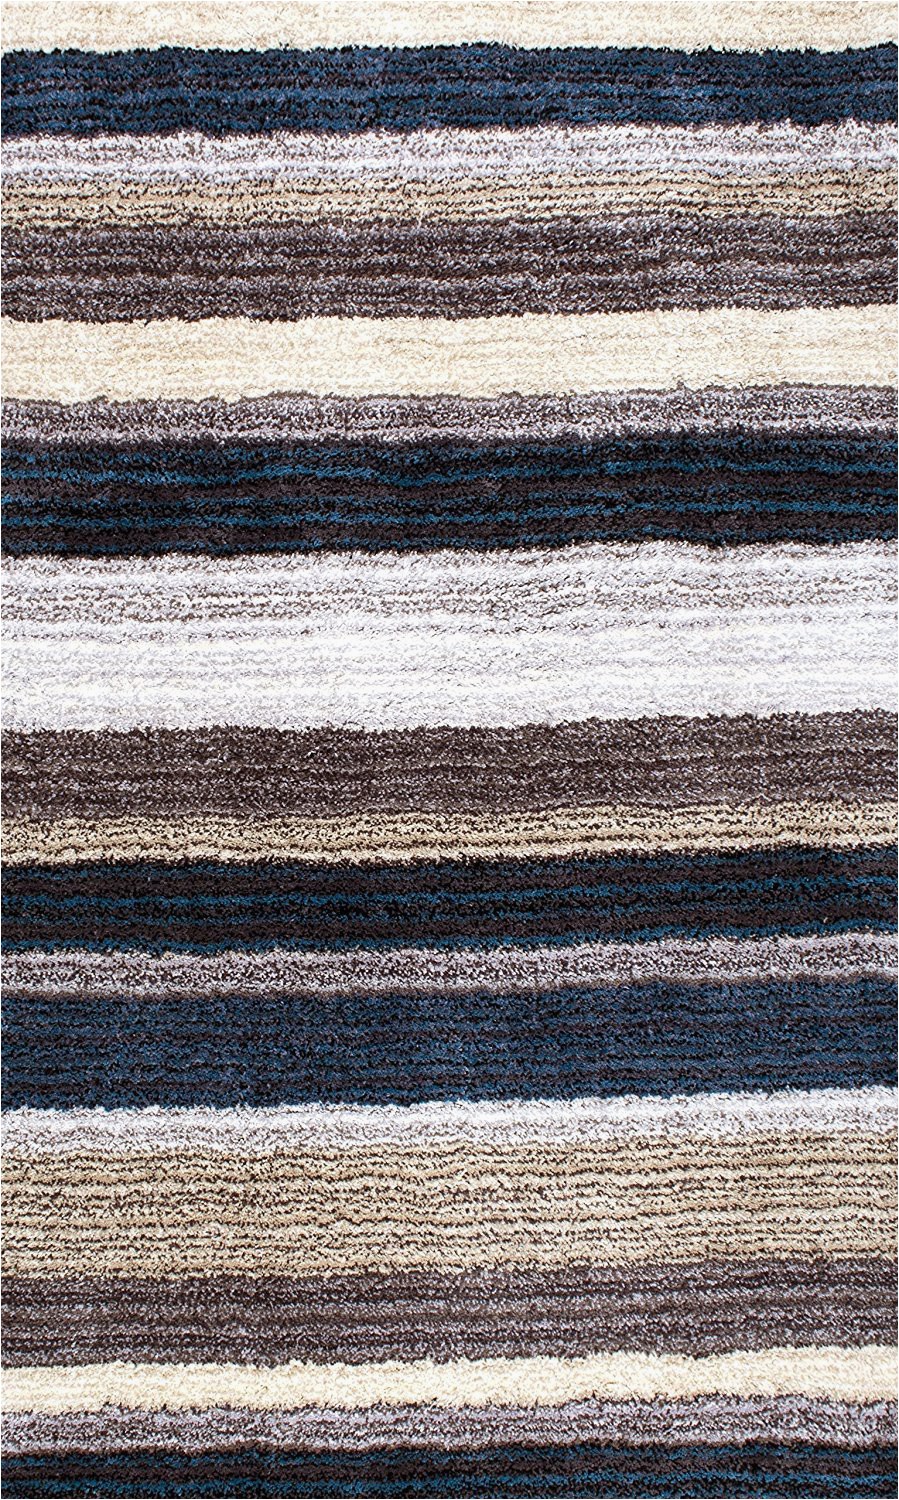 Blue and Gray Striped Rug Premium Handmade Striped Blue Gray Plush Shag area Rugs